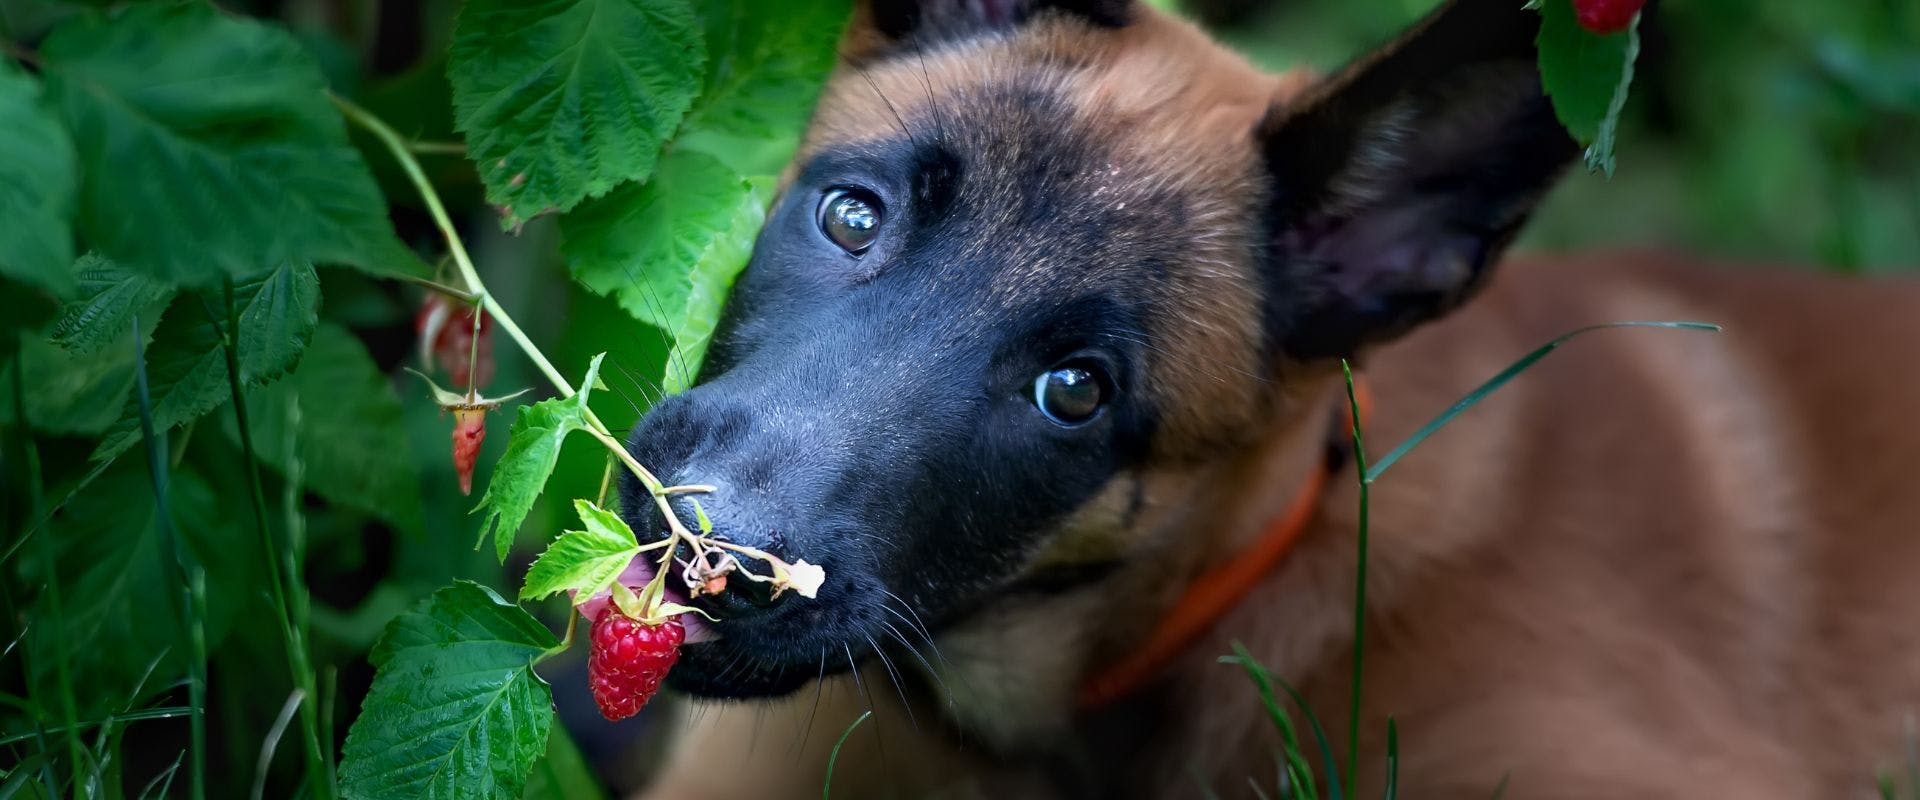 Belgian Malinois dog eating raspberries